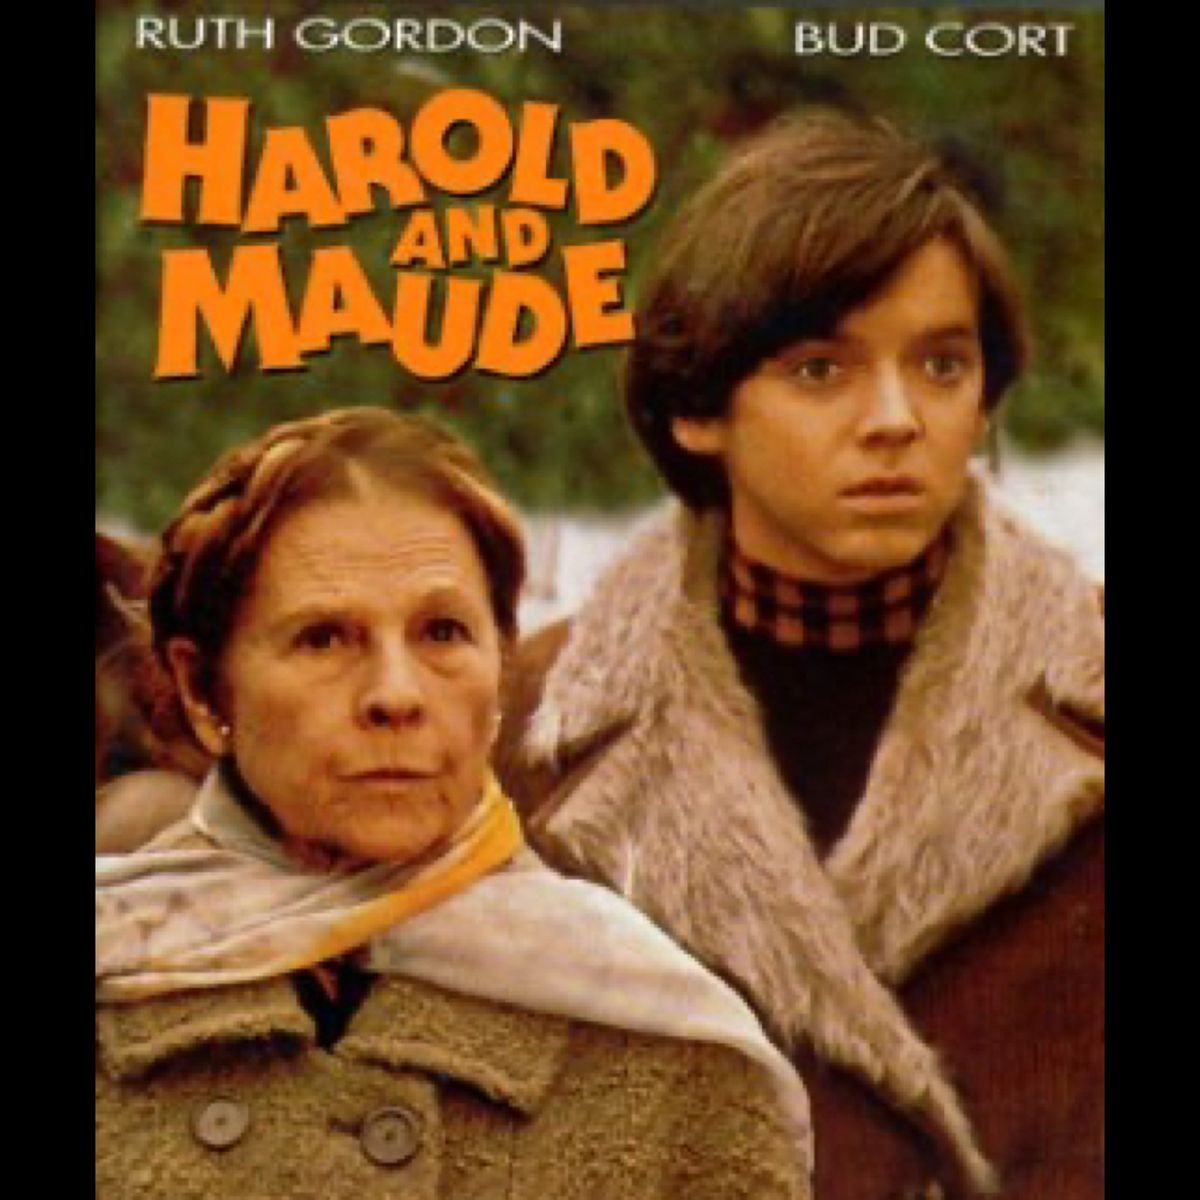 Harold And Maude